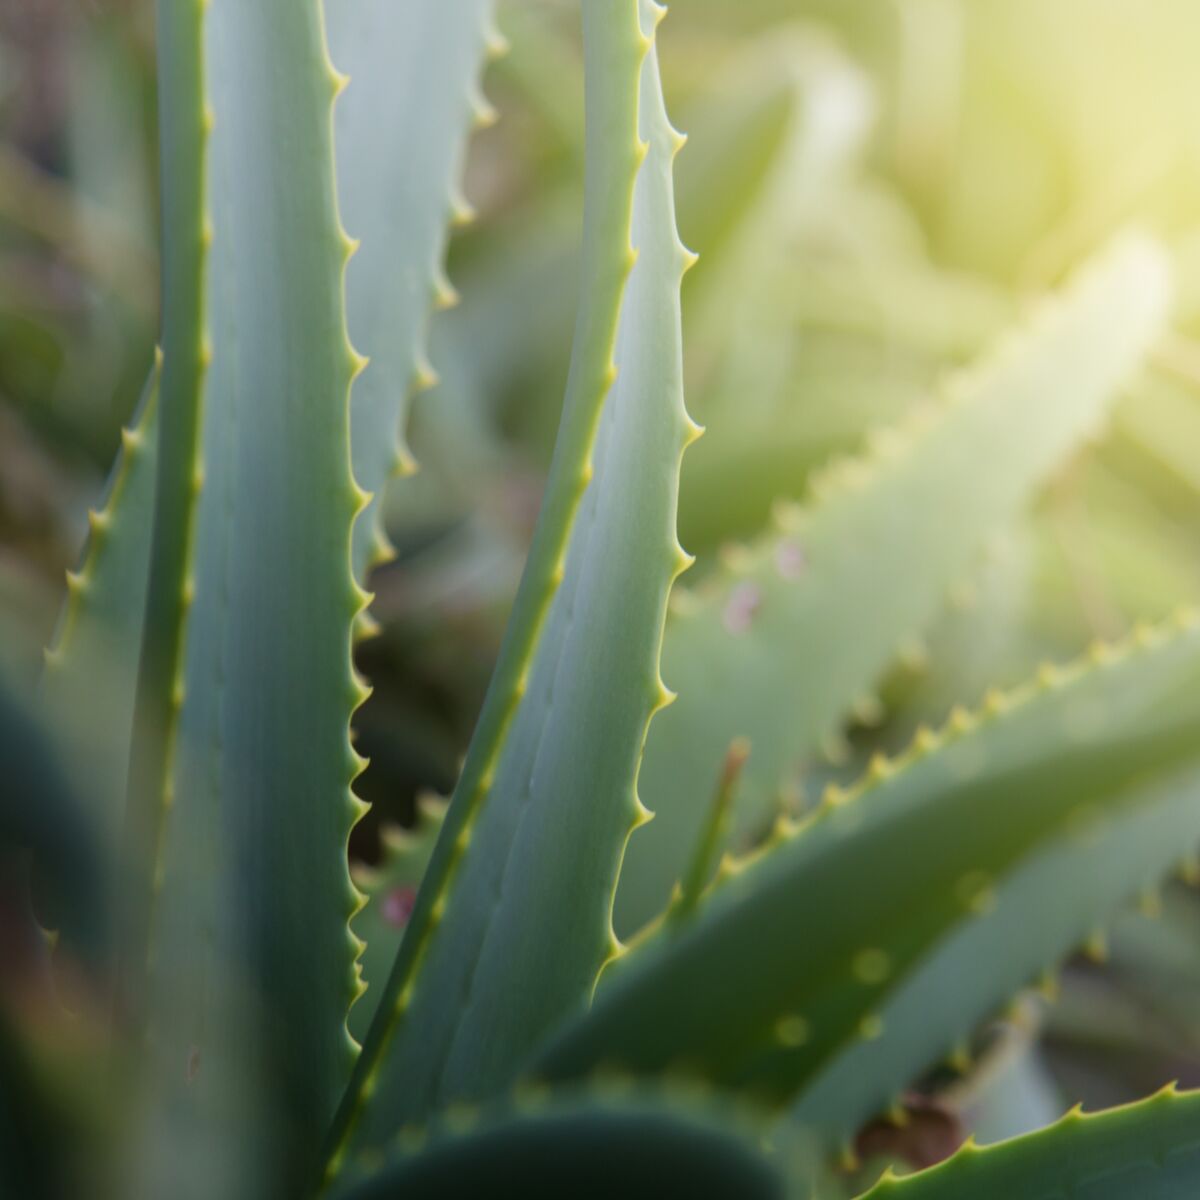 Aloe Vera - Nos conseils pour arroser et entretenir vos plantes d